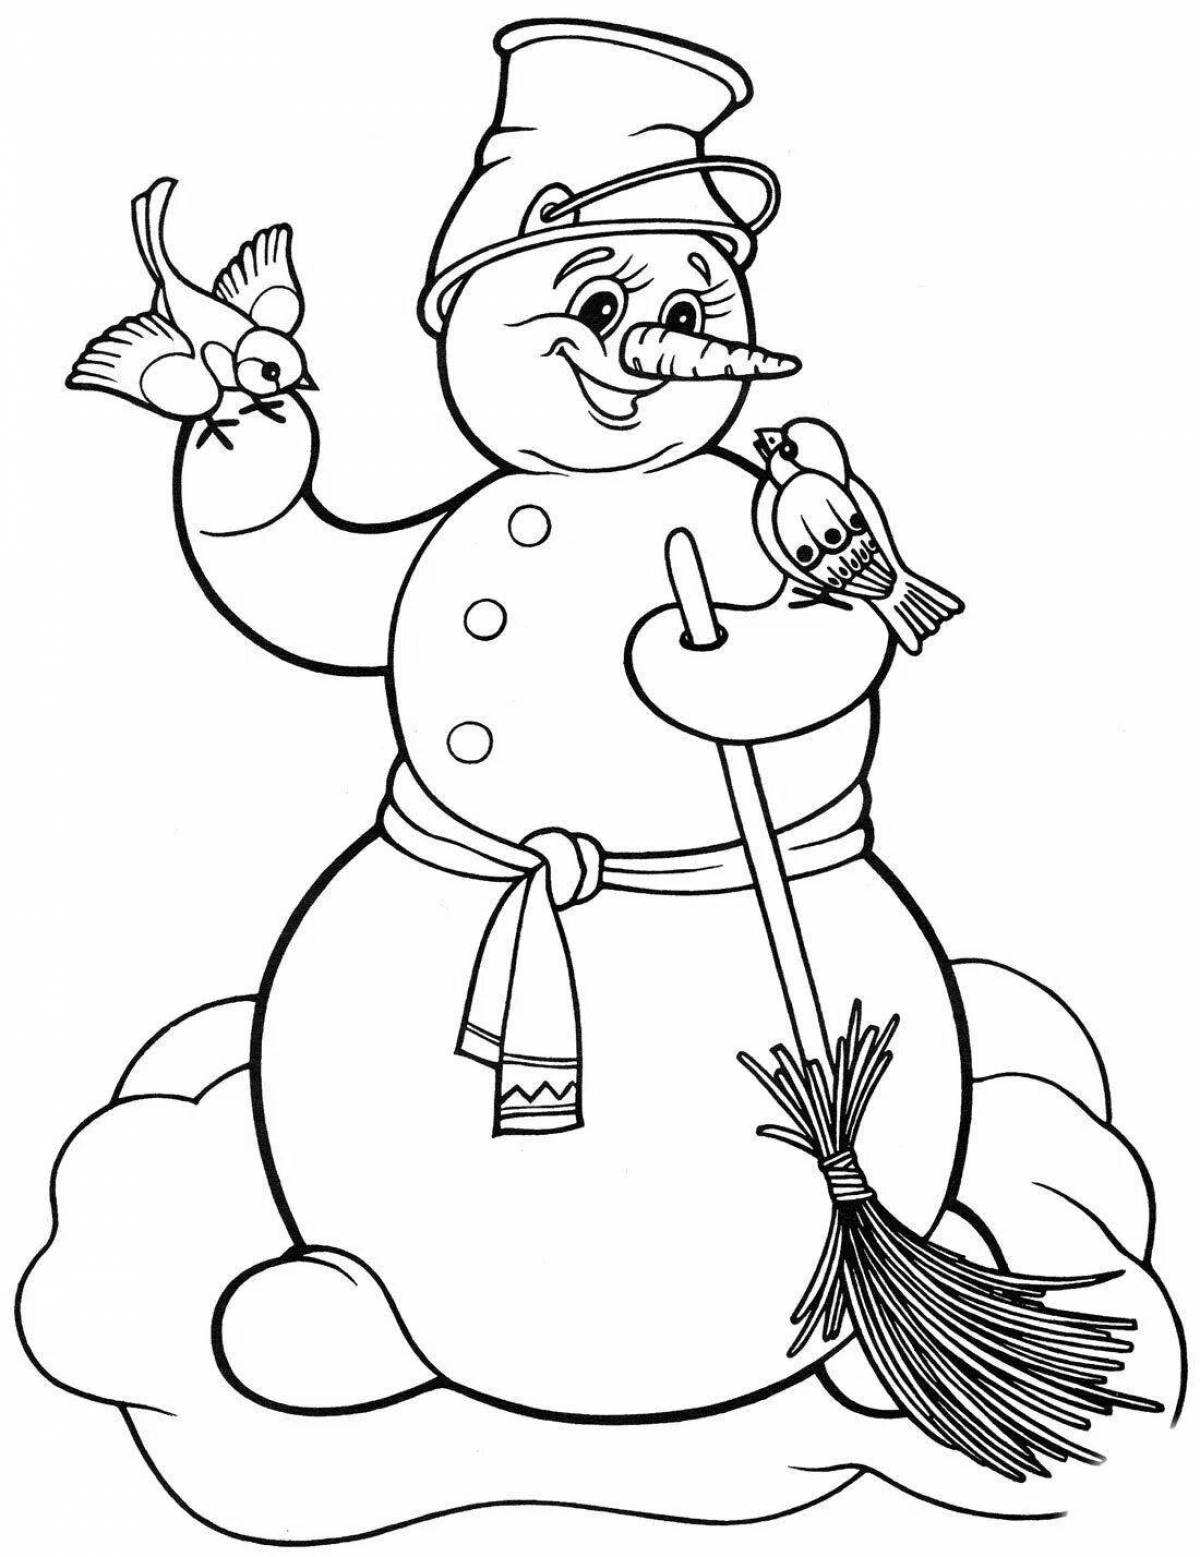 Magical Christmas snowman coloring book